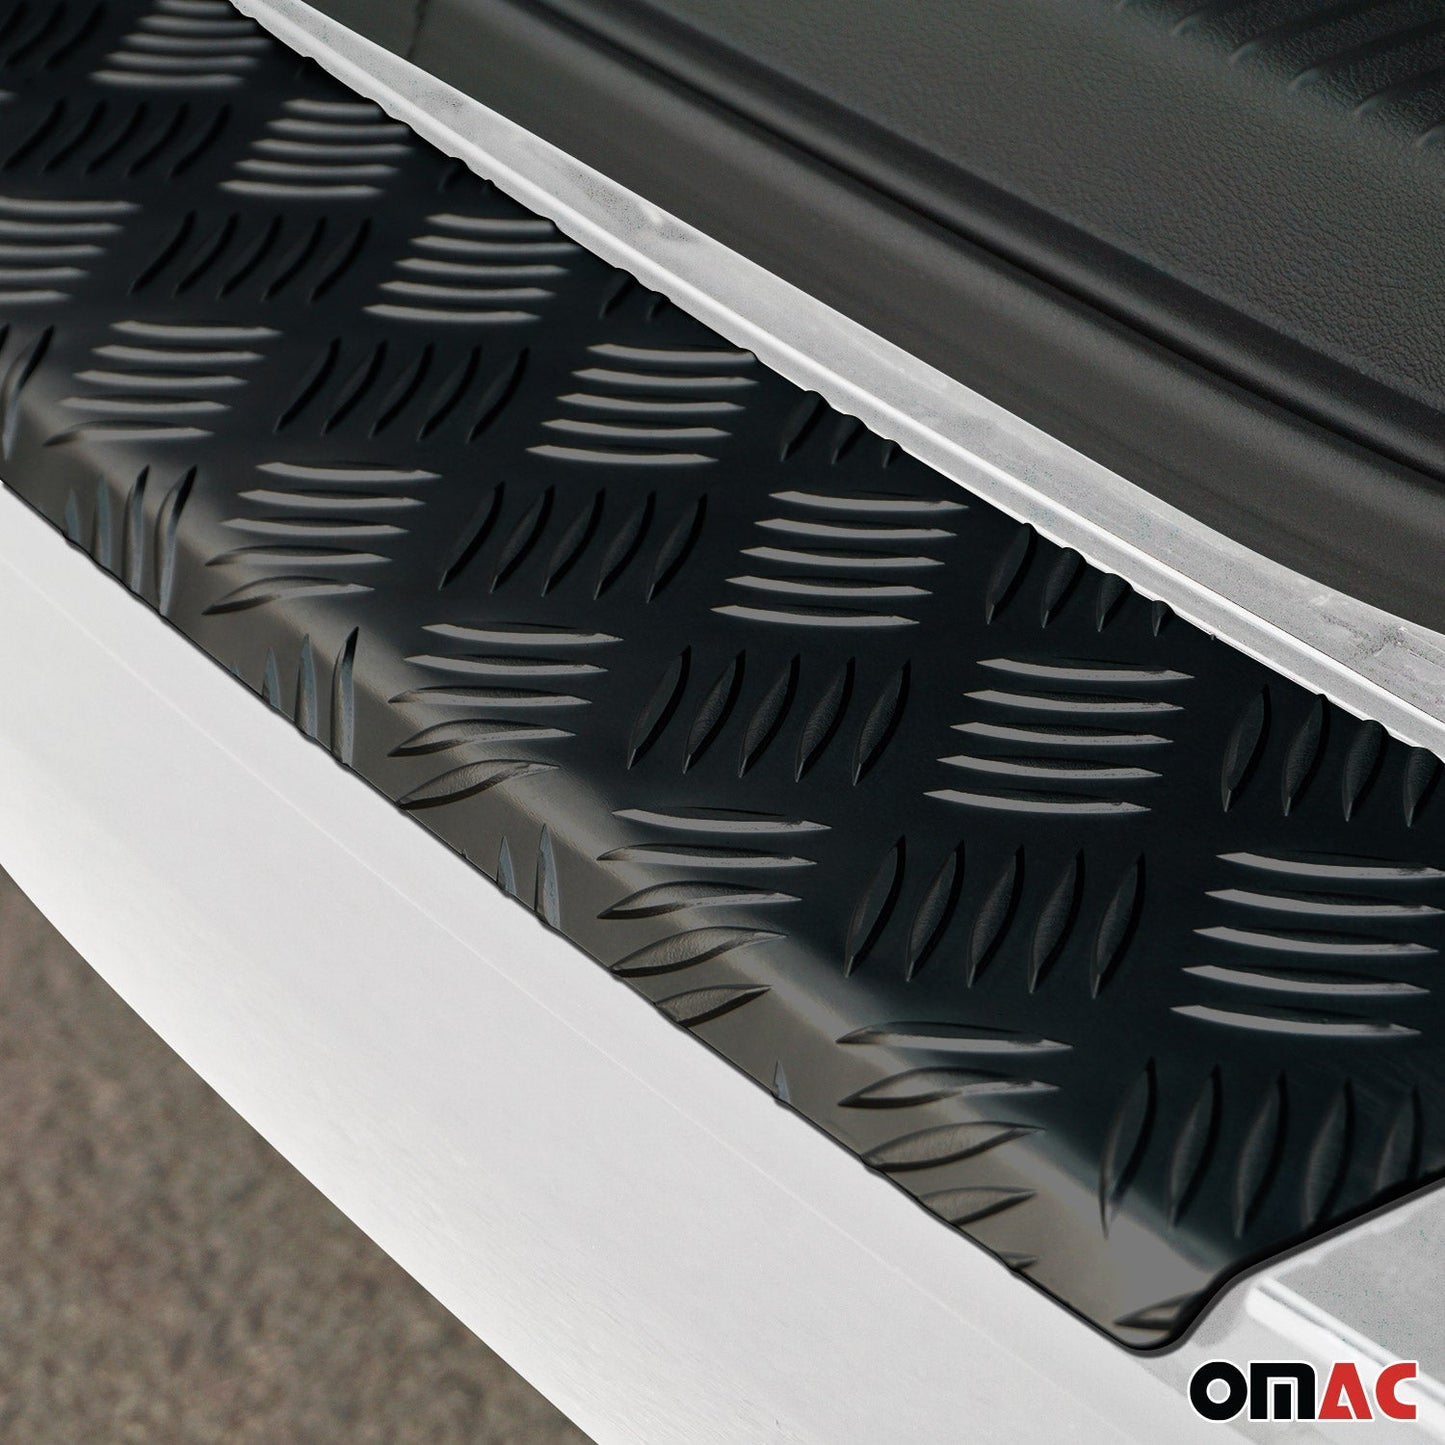 OMAC Rear Bumper Sill Cover Protector for Ford Transit 2015-2024 Aluminium Black 2626093AB